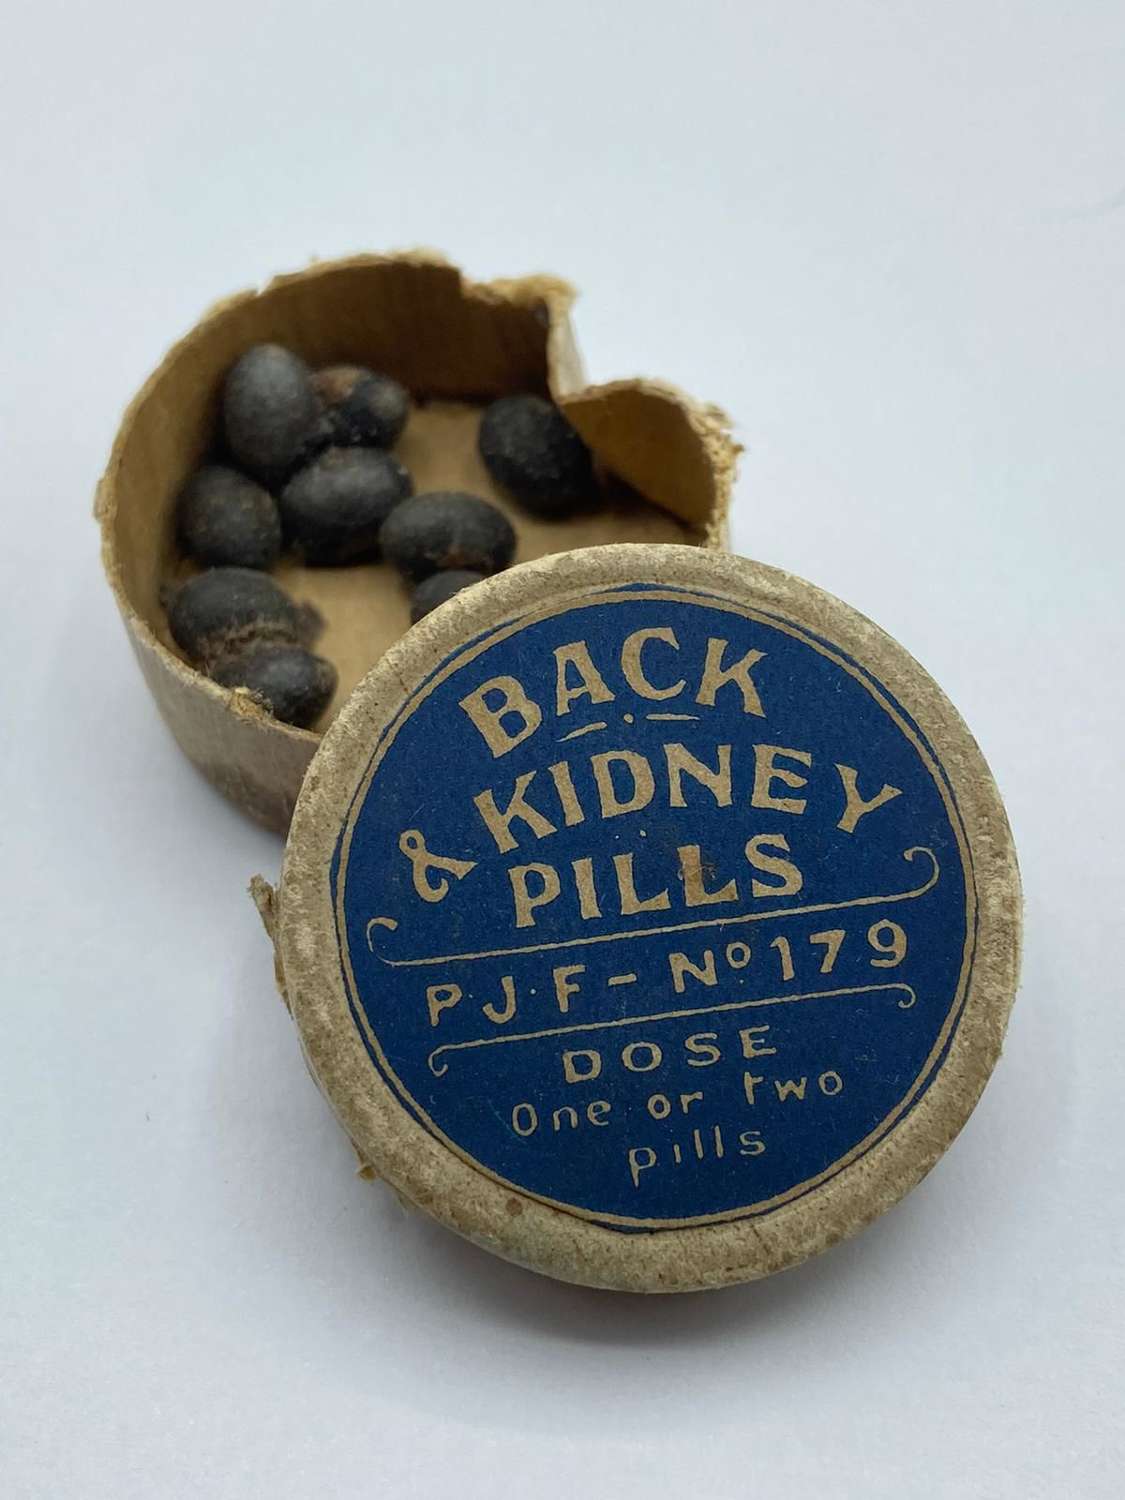 WW1 British Home Front Pharmaceutical Unused Back & Kidney Pills Box